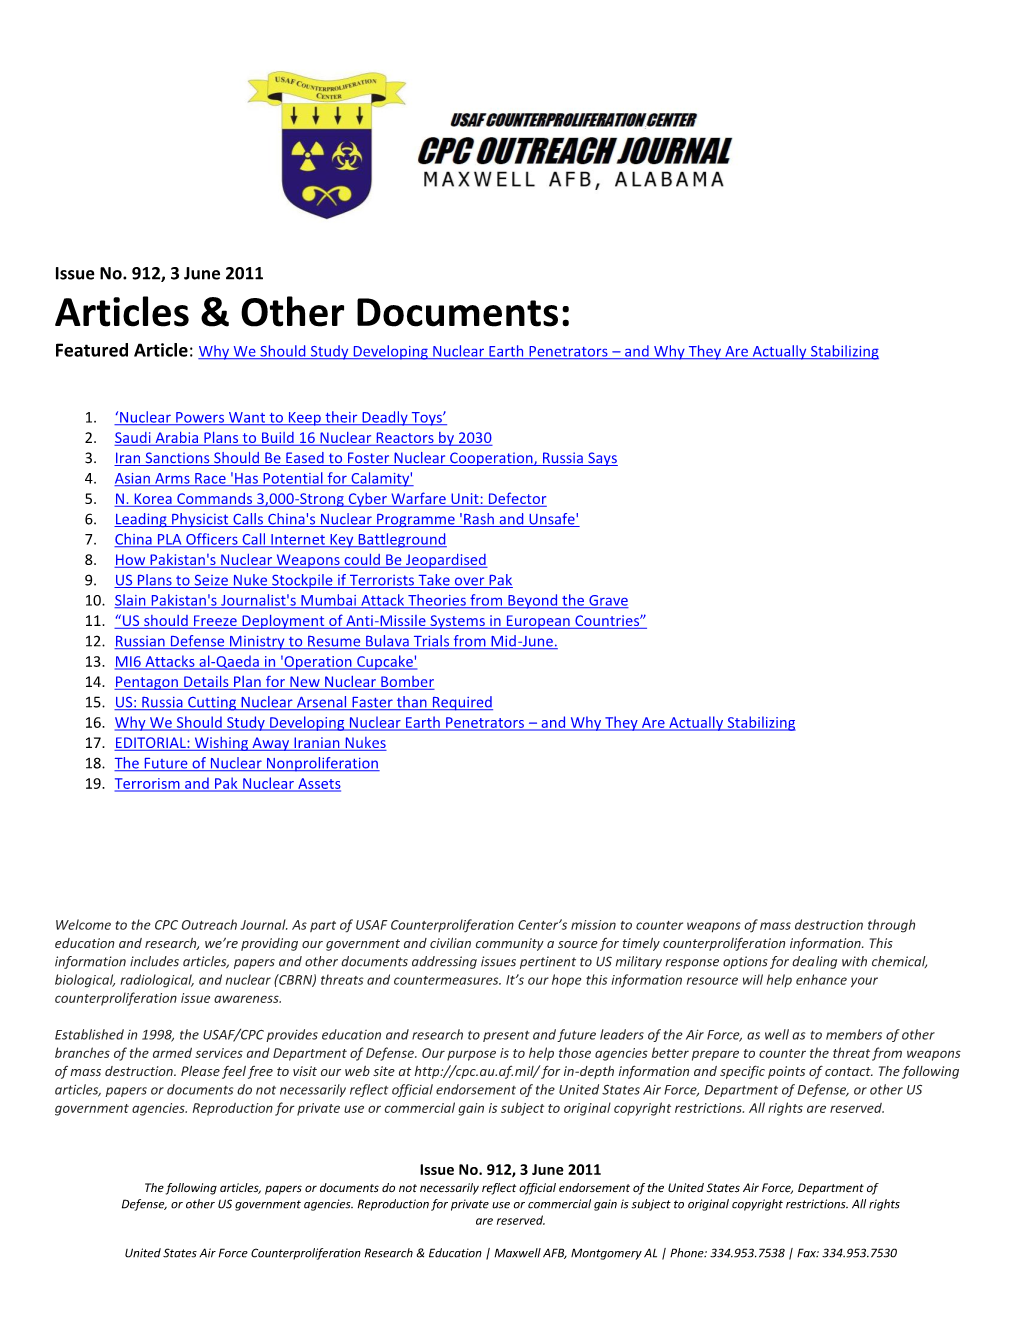 USAF Counterproliferation Center CPC Outreach Journal #912